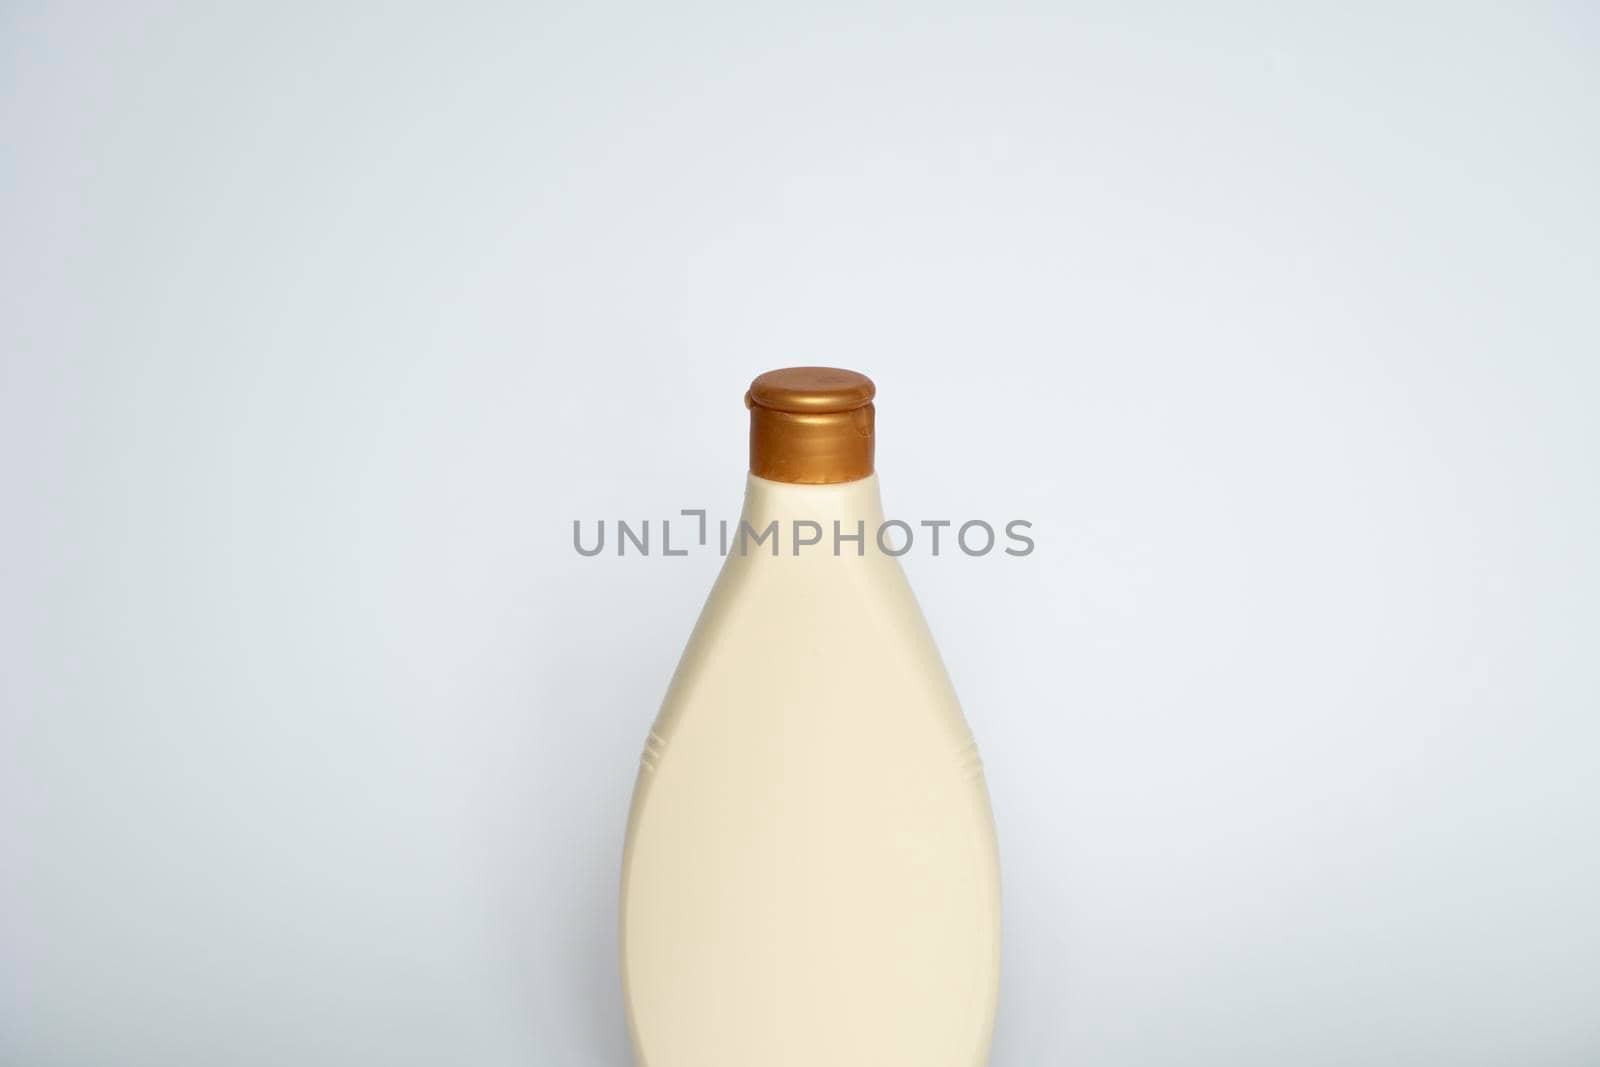 Beige blank plastic bottles isolated on white background